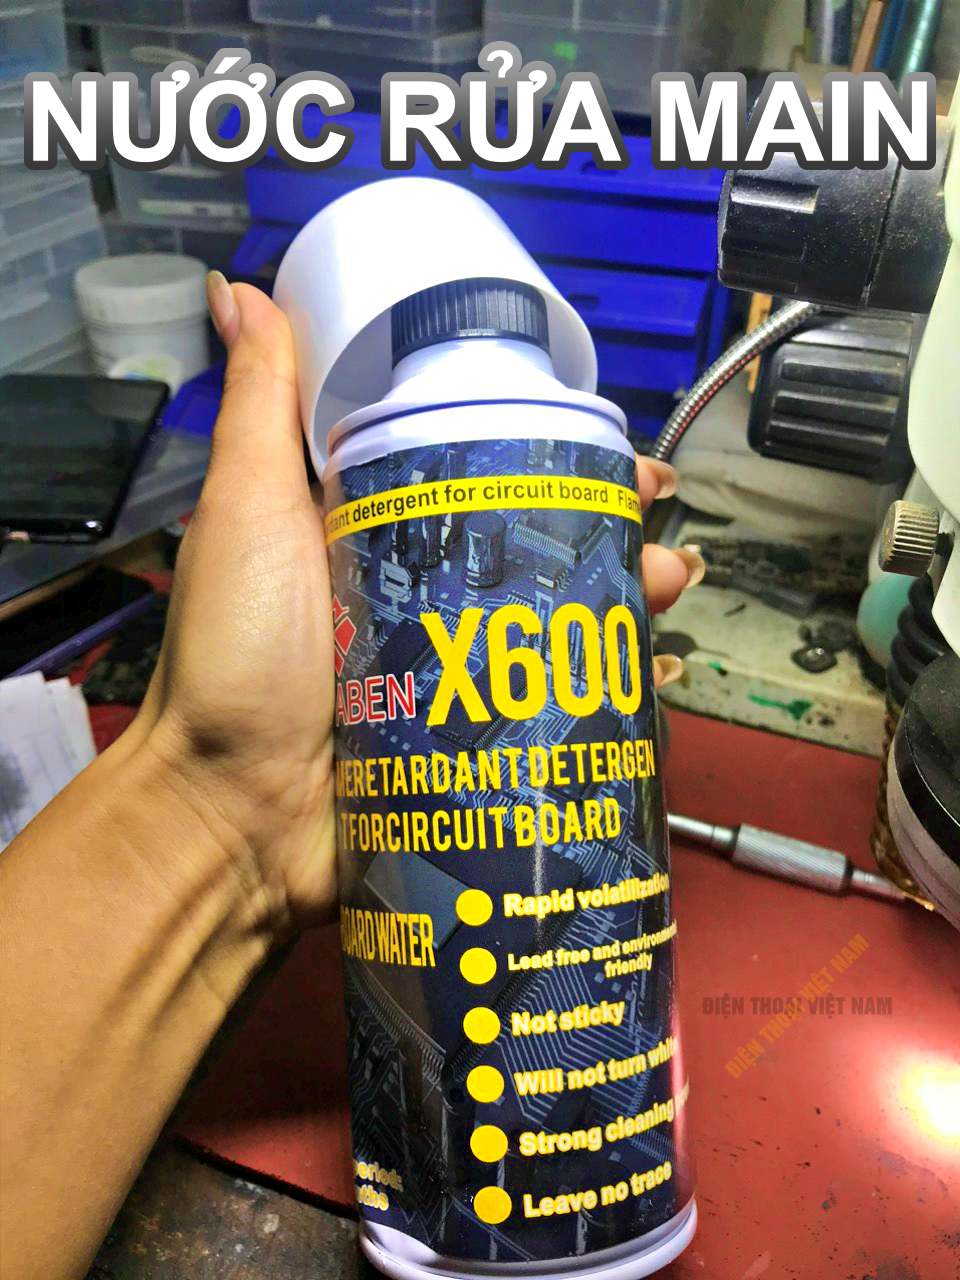 Nước rửa main X600